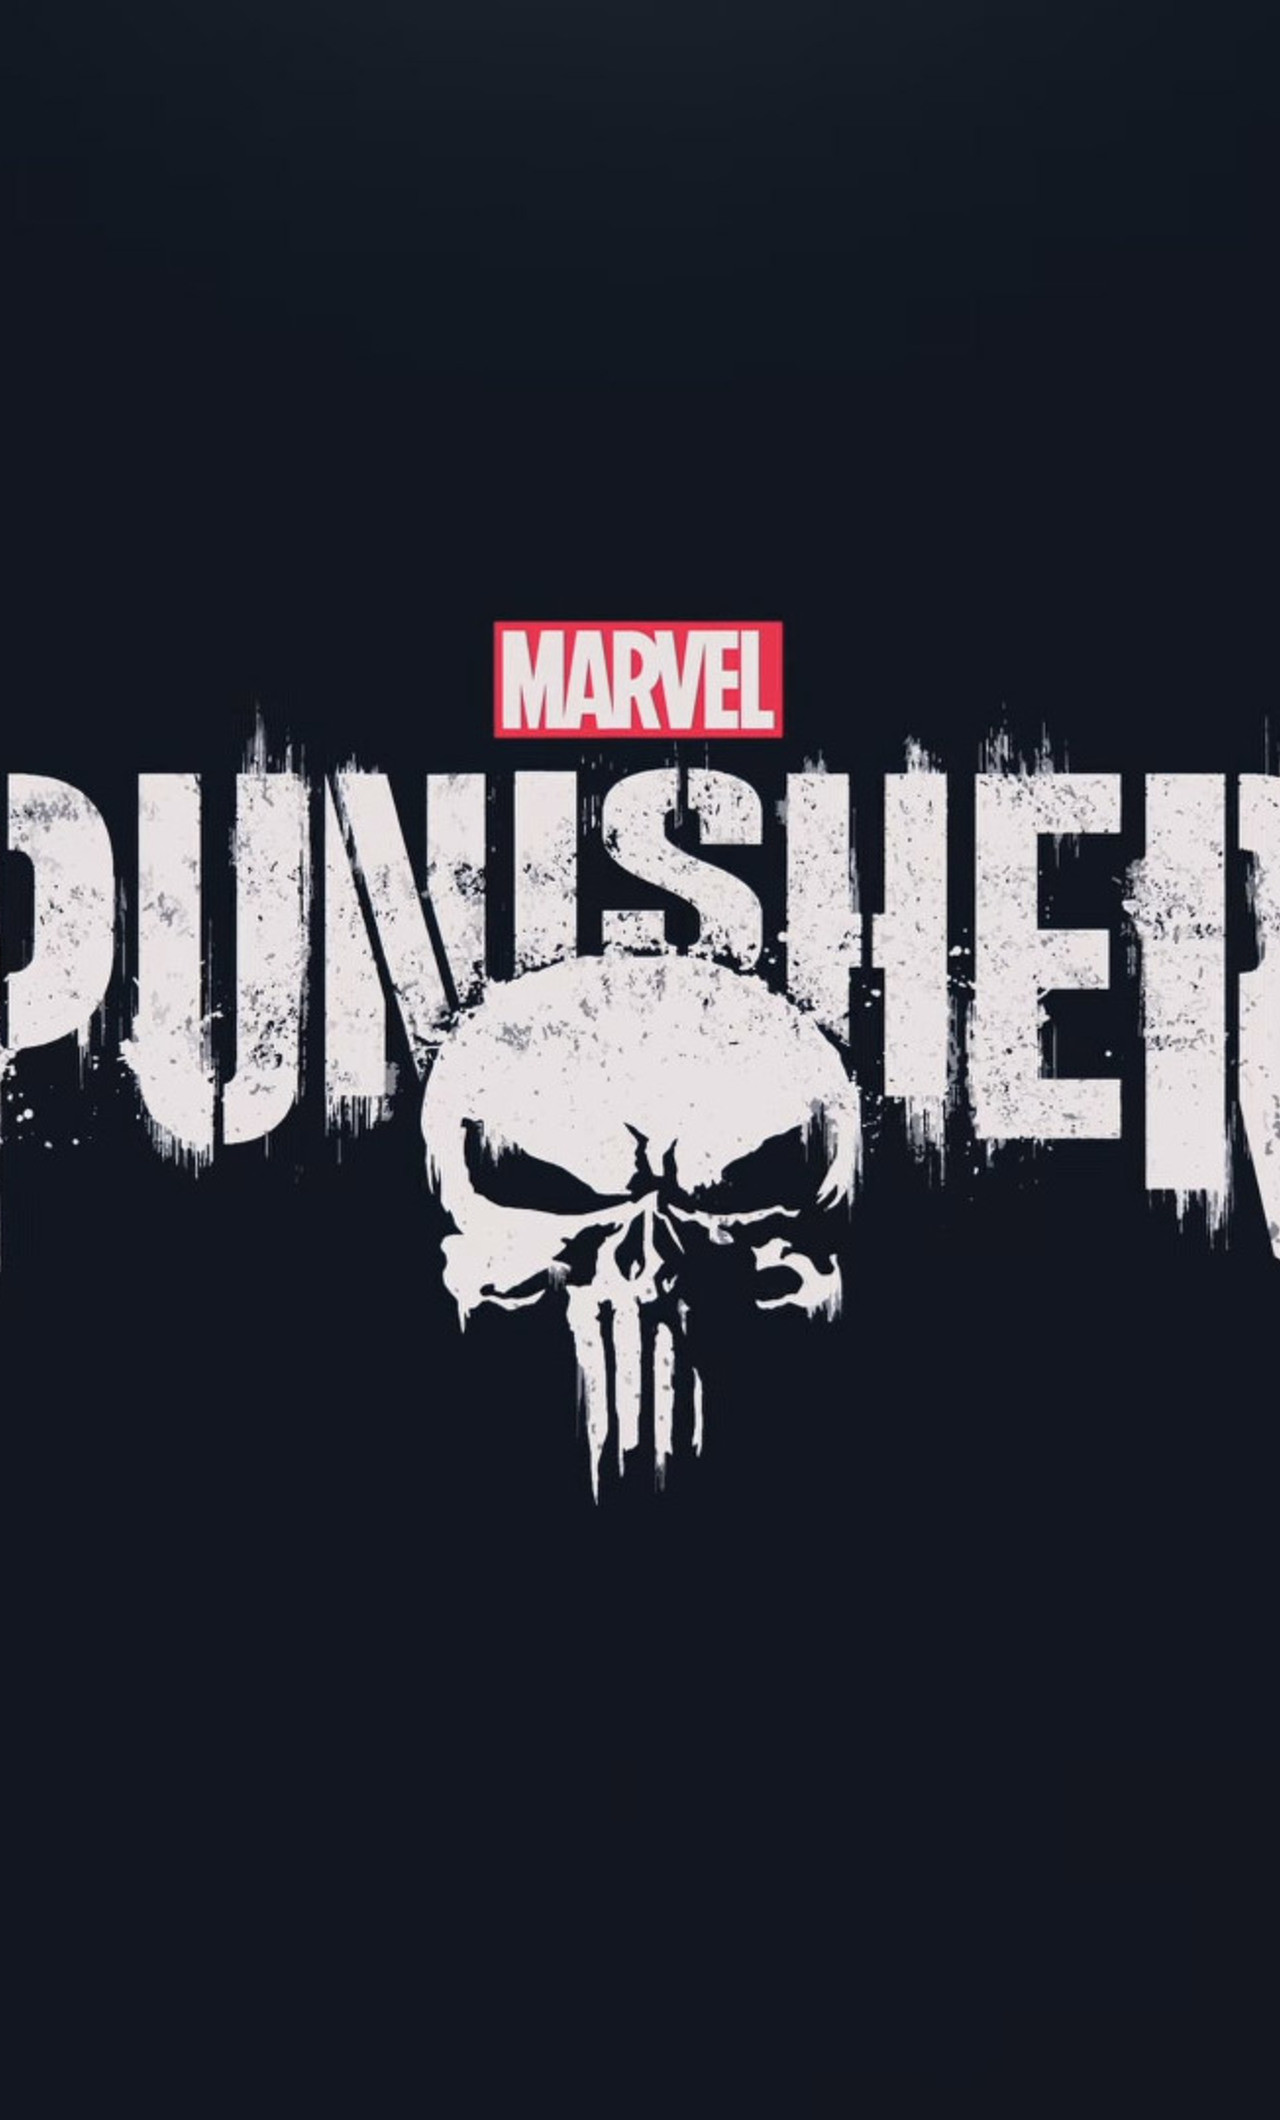 32+] Marvel's The Punisher Wallpapers - WallpaperSafari